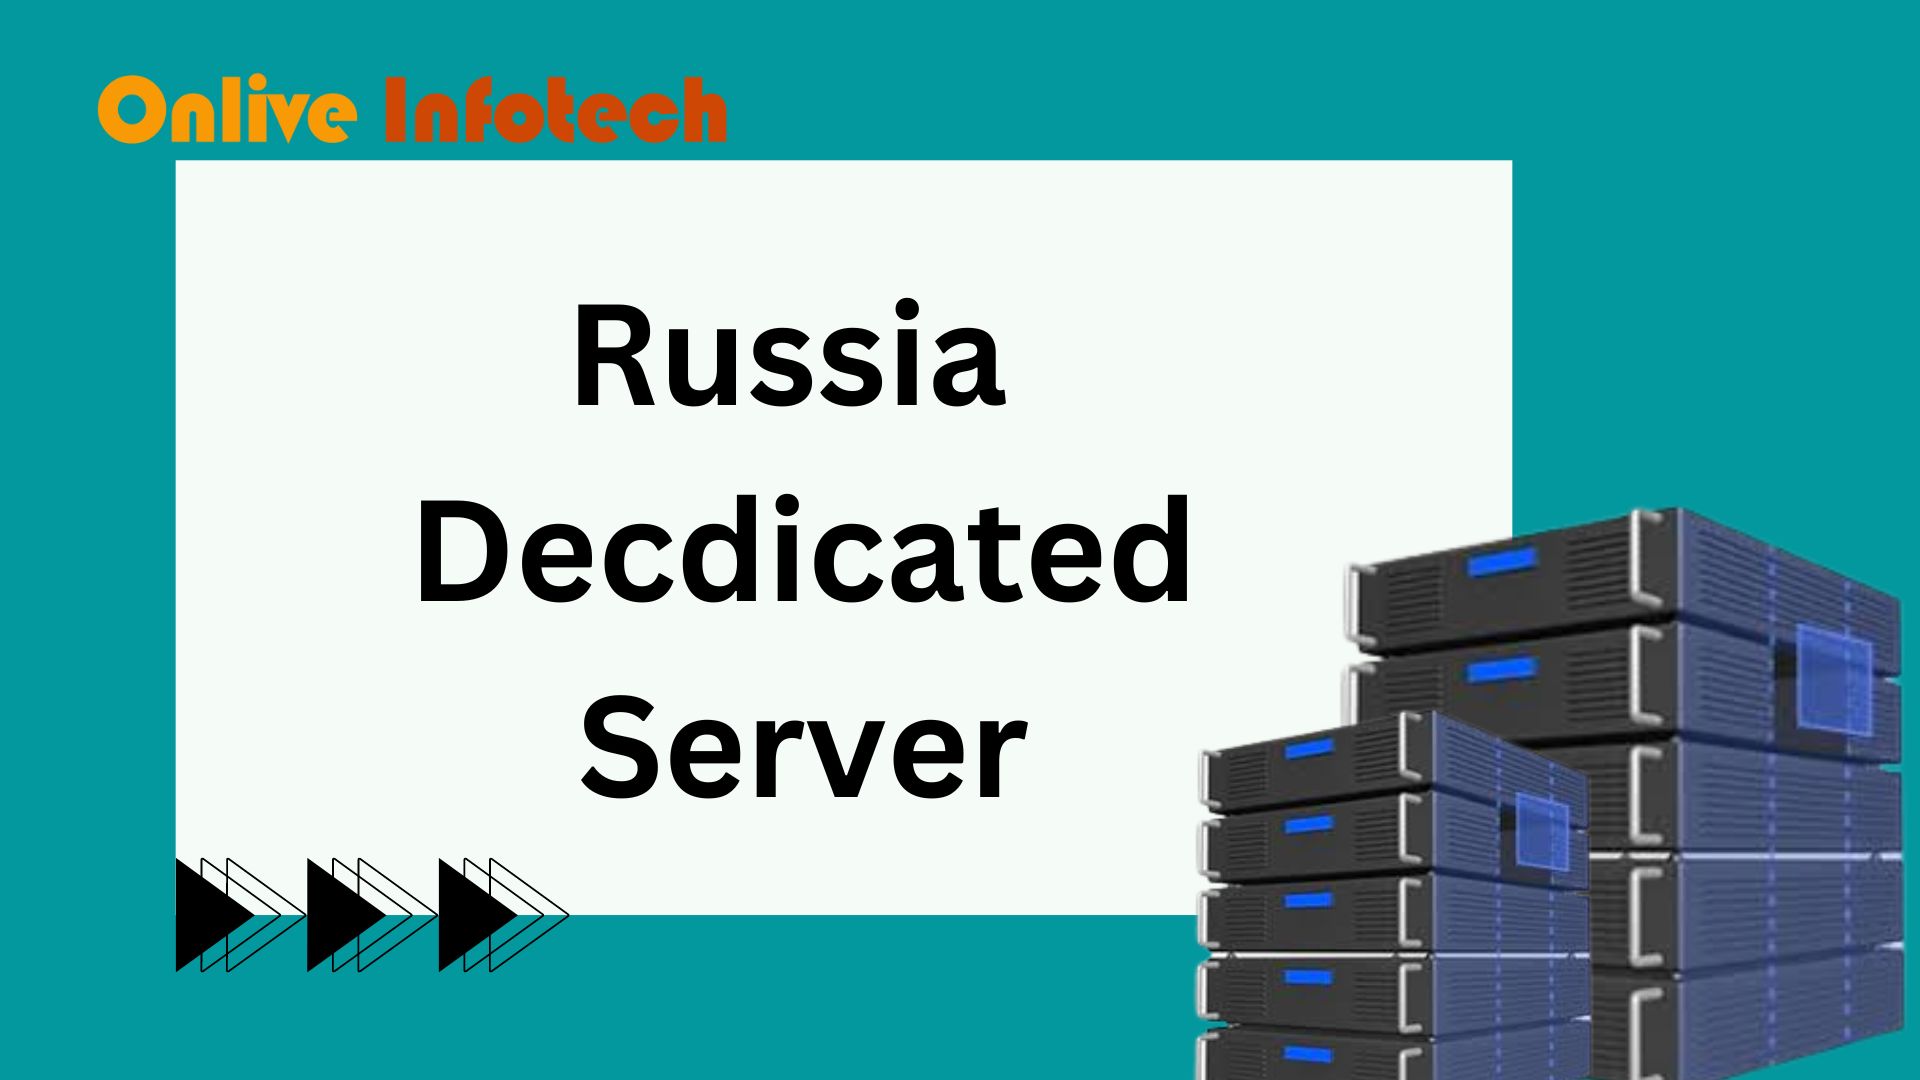 Russia Decdicated Server